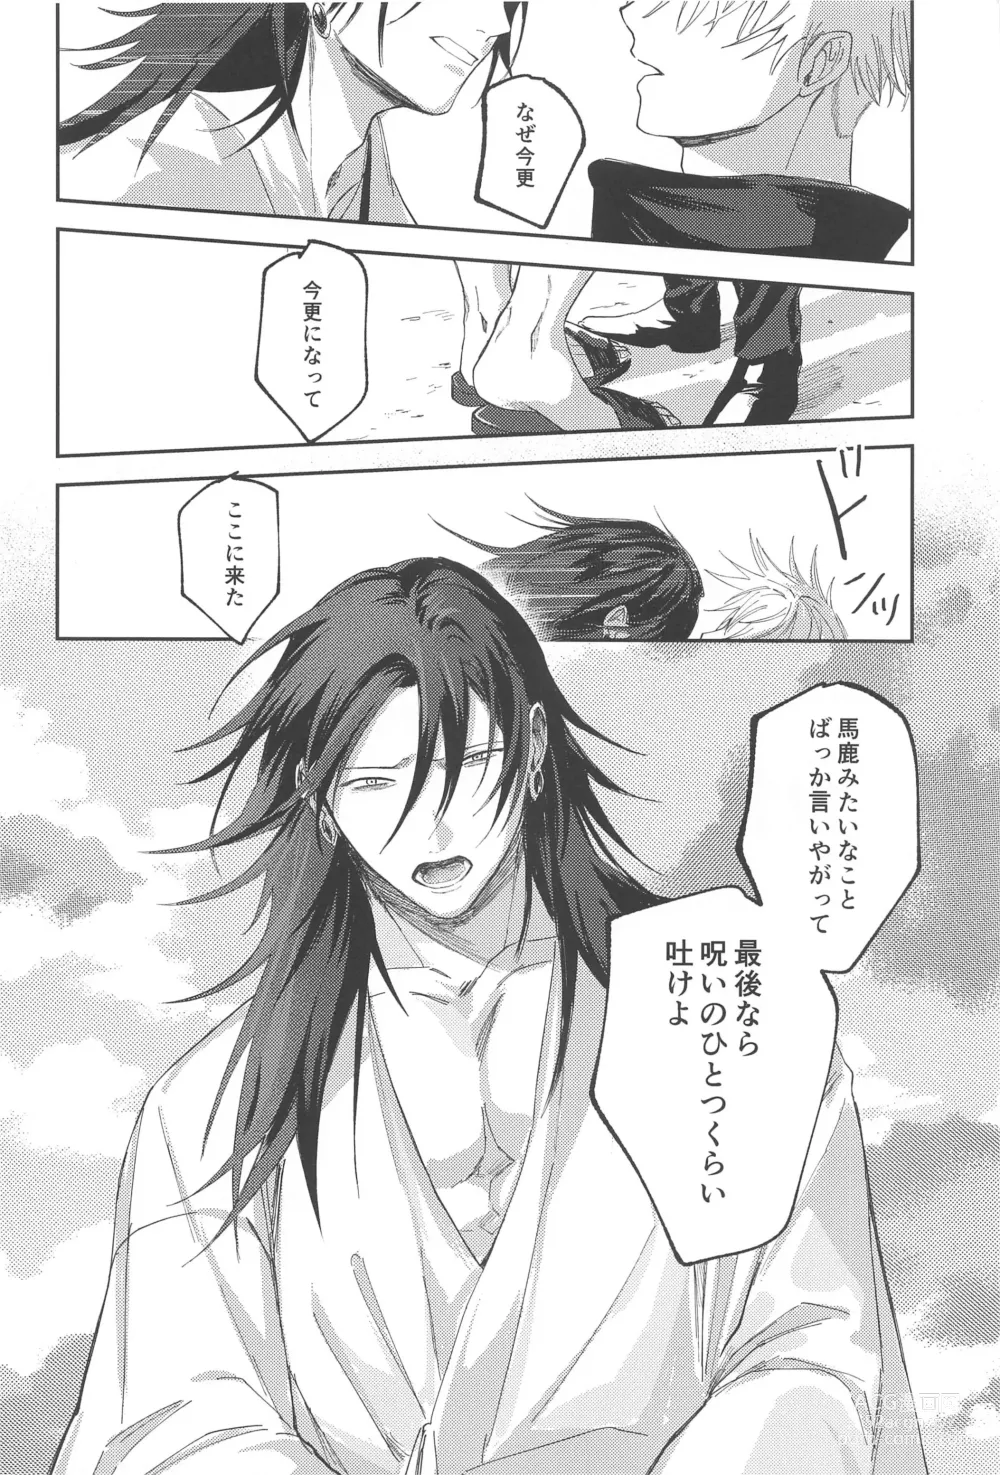 Page 33 of doujinshi Higatsuku Inazuma - Lightning that catches fire